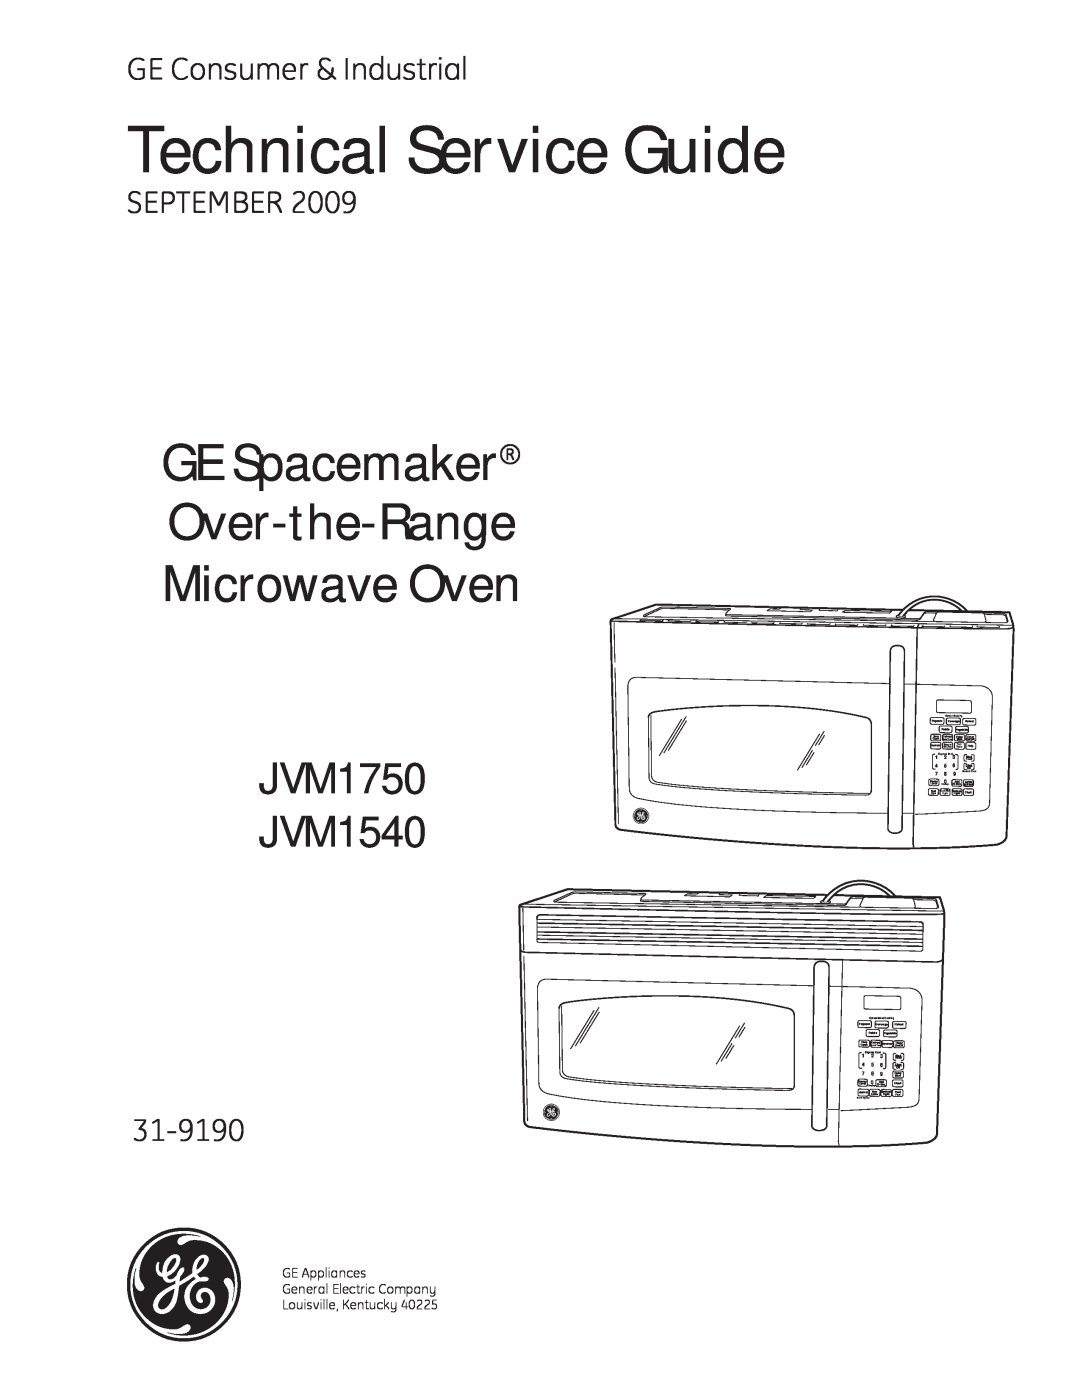 GE manual Technical Service Guide, GE Spacemaker Over-the-Range Microwave Oven, JVM1750 JVM1540, September, 31-9190 